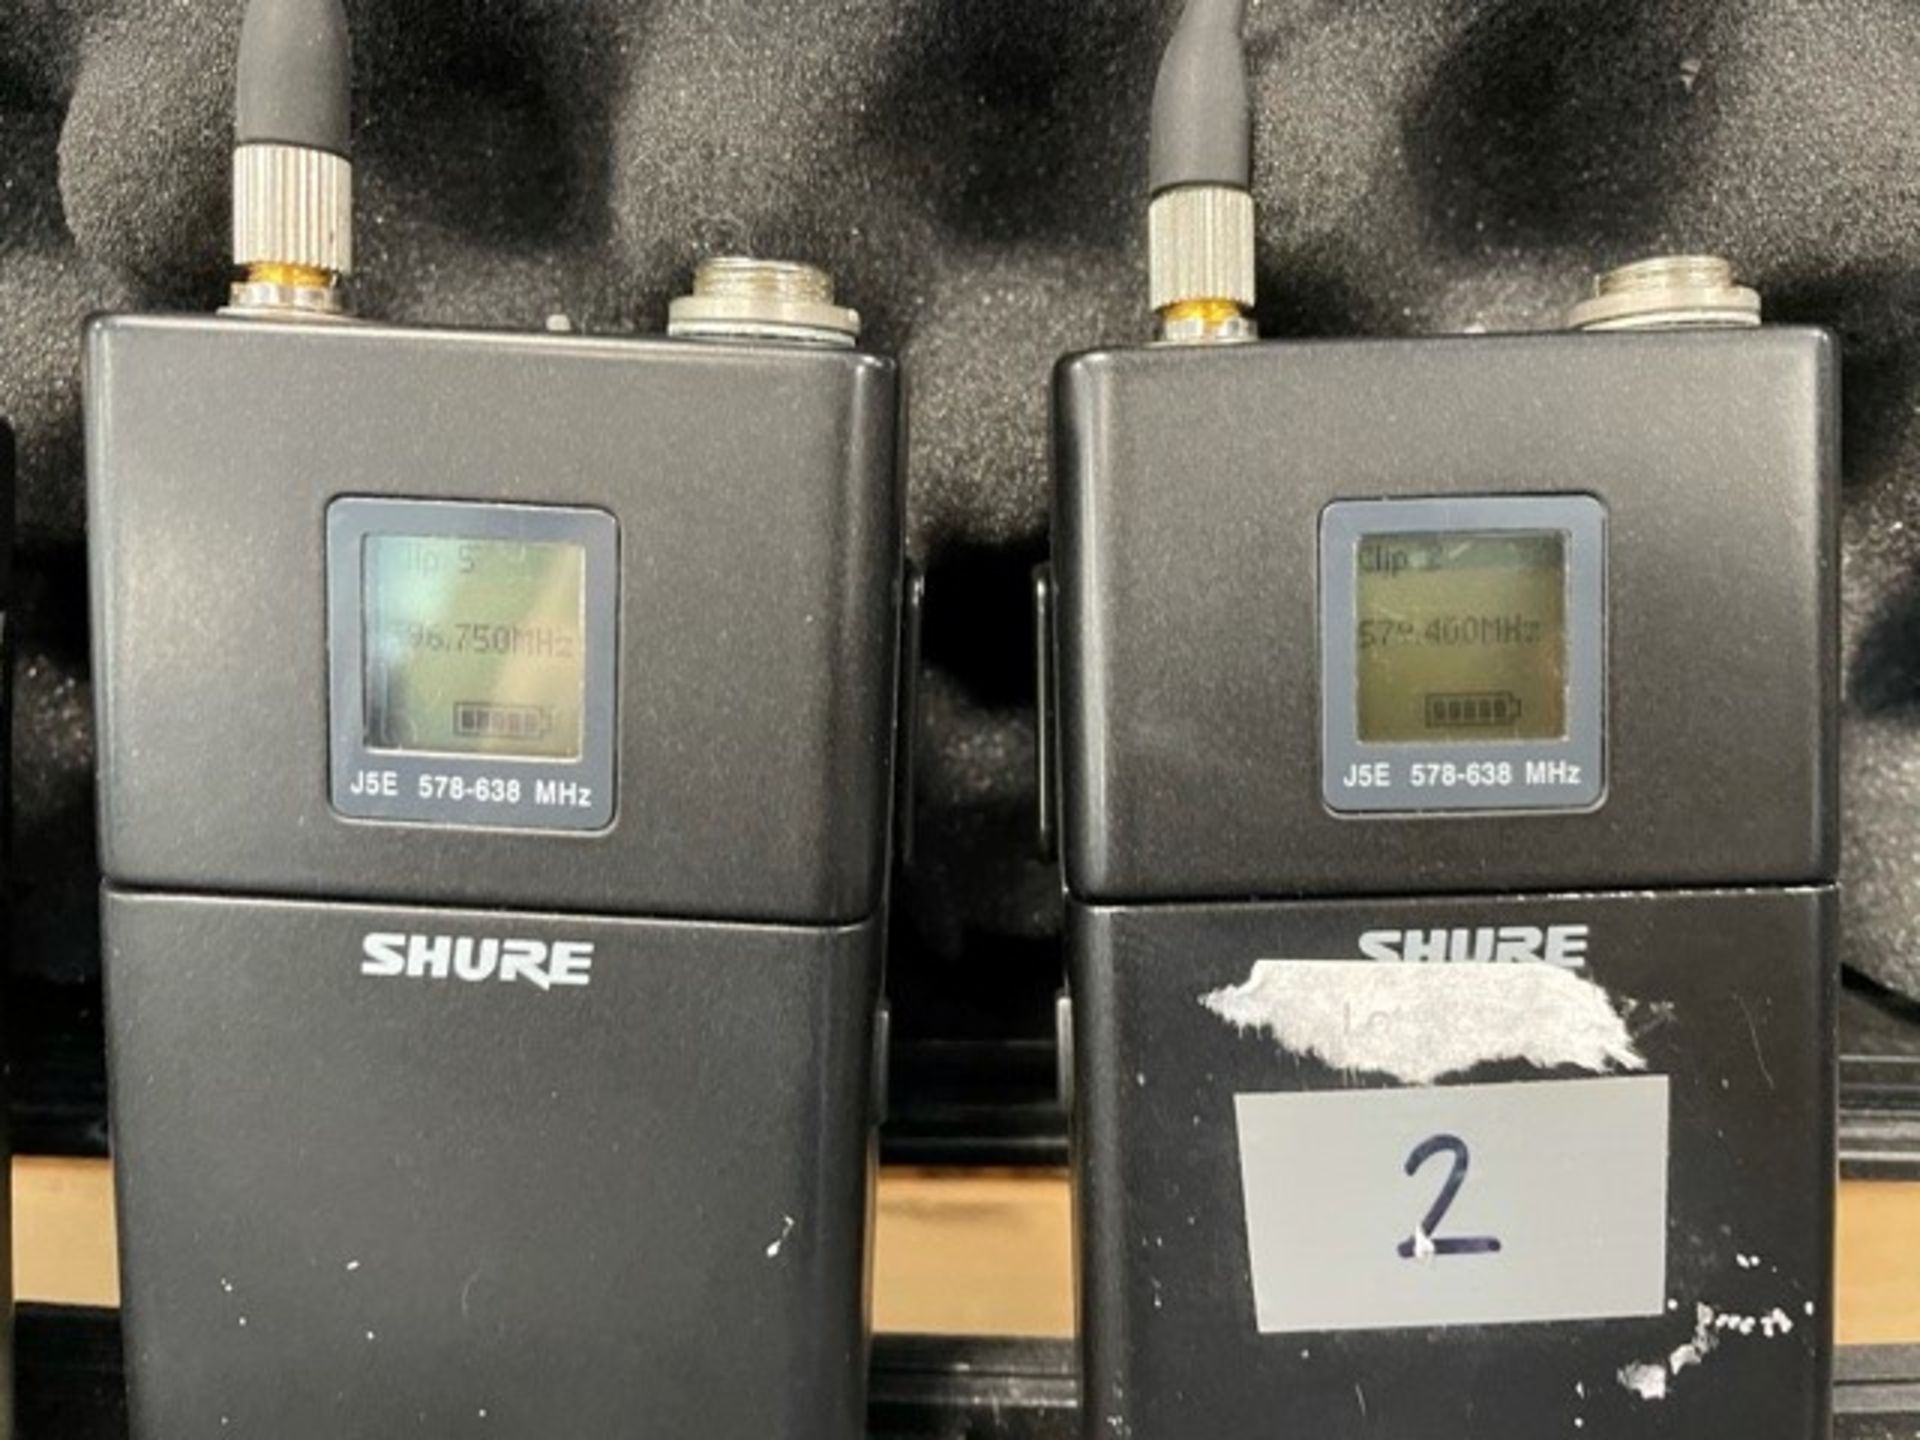 4 x Shure UR1 Transmitters In Plastic Case - Frequency Range: J5E - Ref: 401 - Image 2 of 6